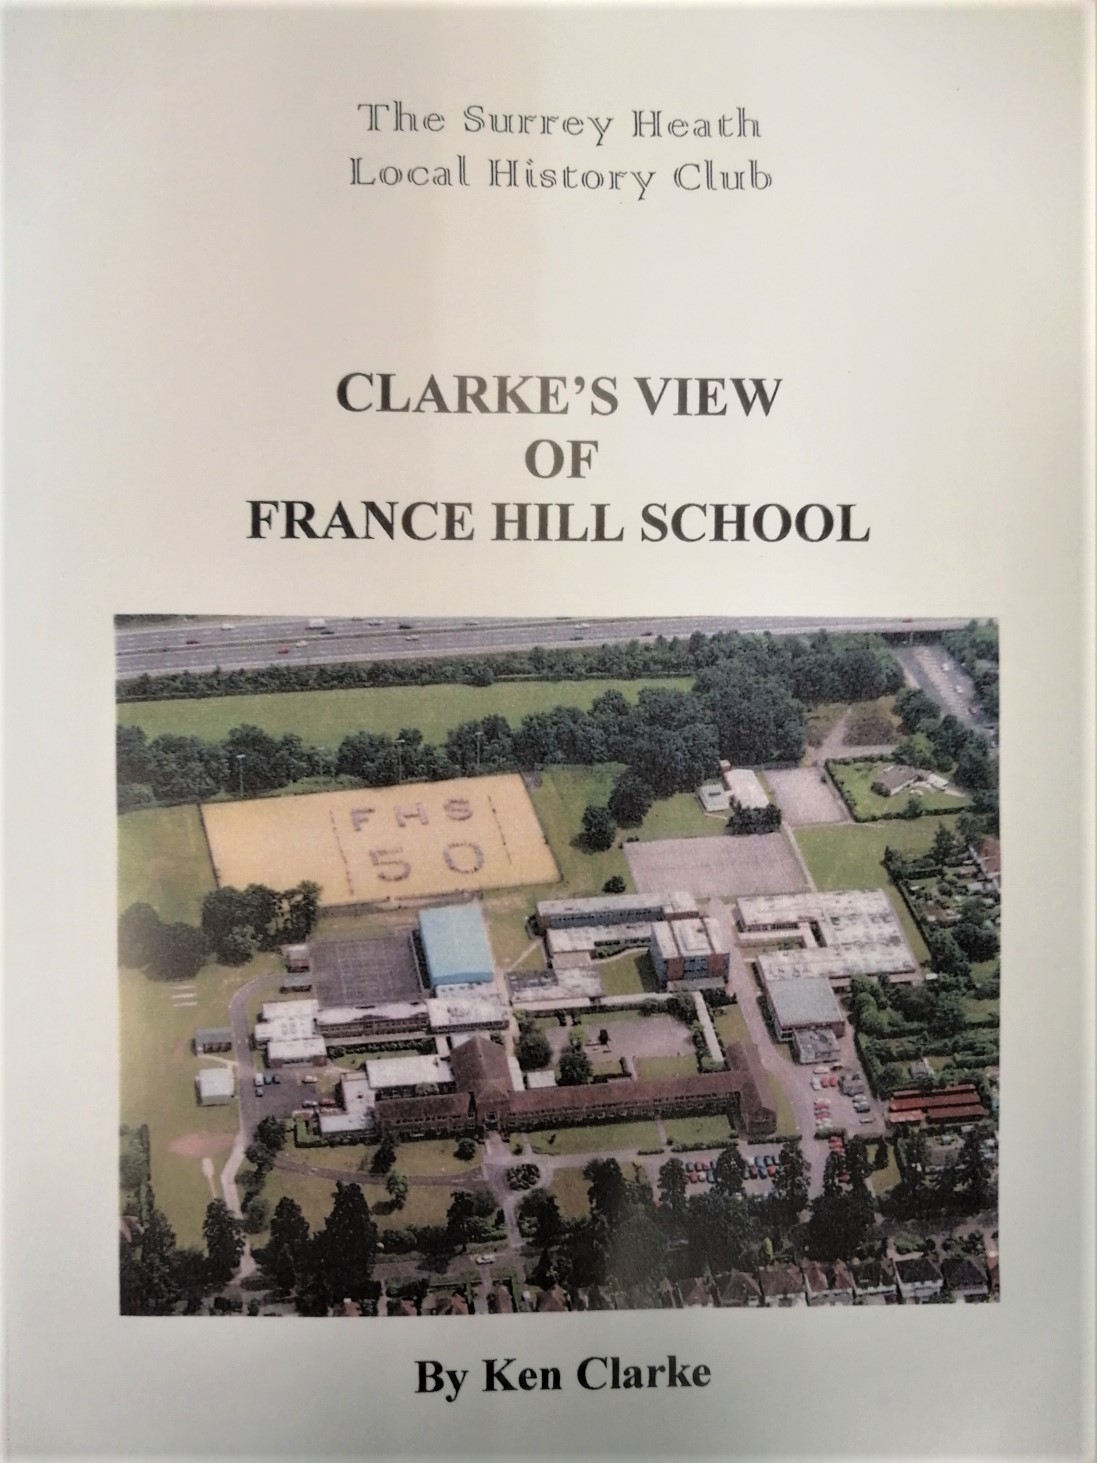 CLARKES VIEW OF FRANCE HILL SCHOOL